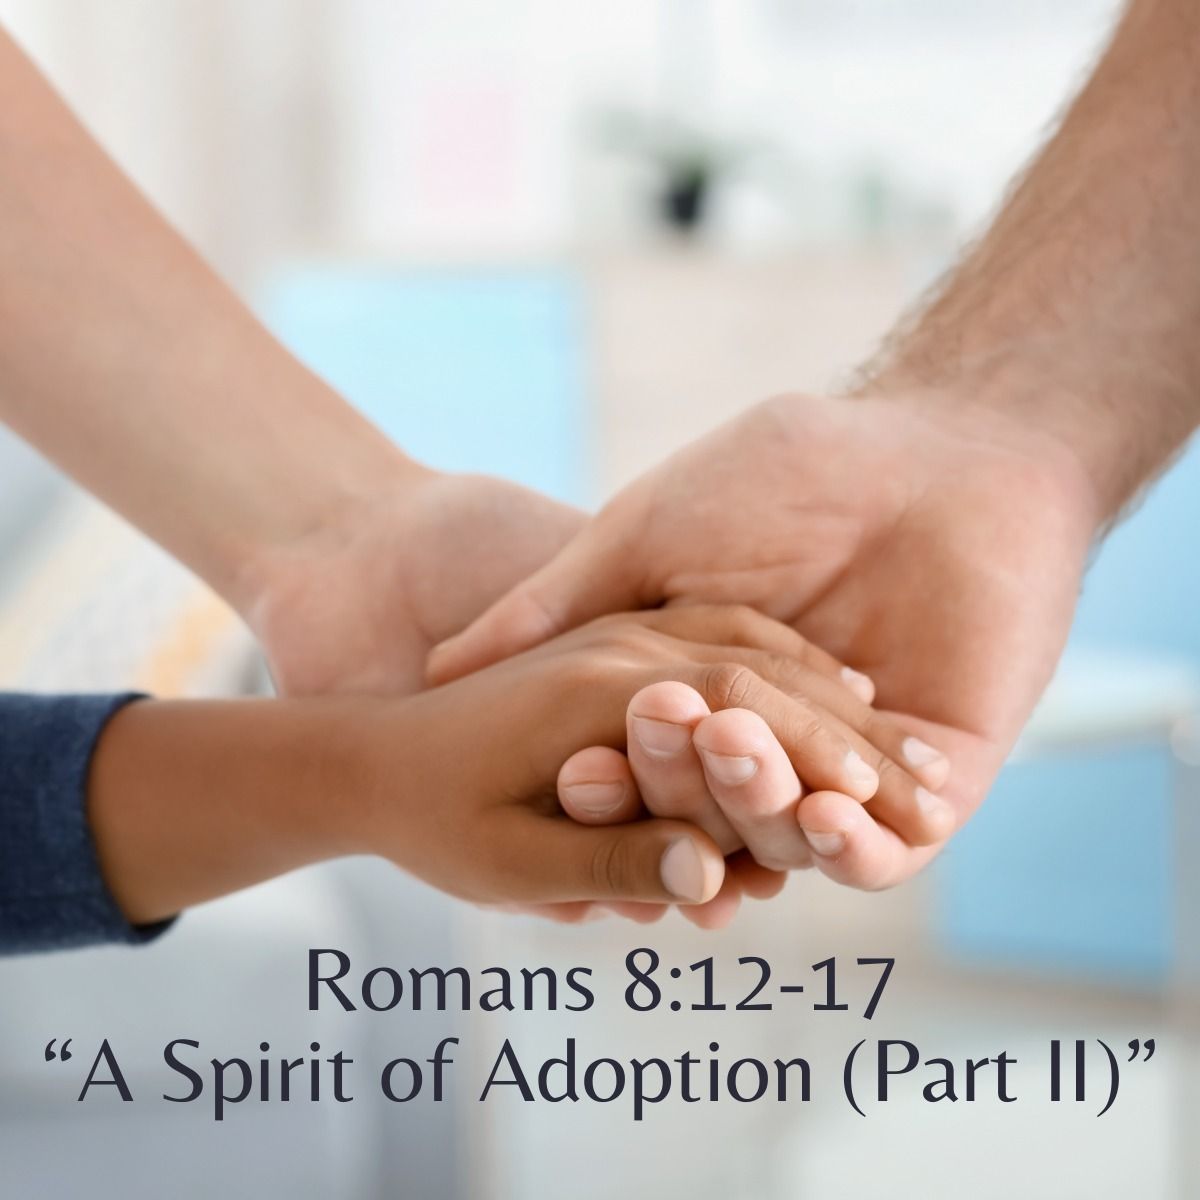  A Spirit of Adoption (Part II) - Modern Worship Service